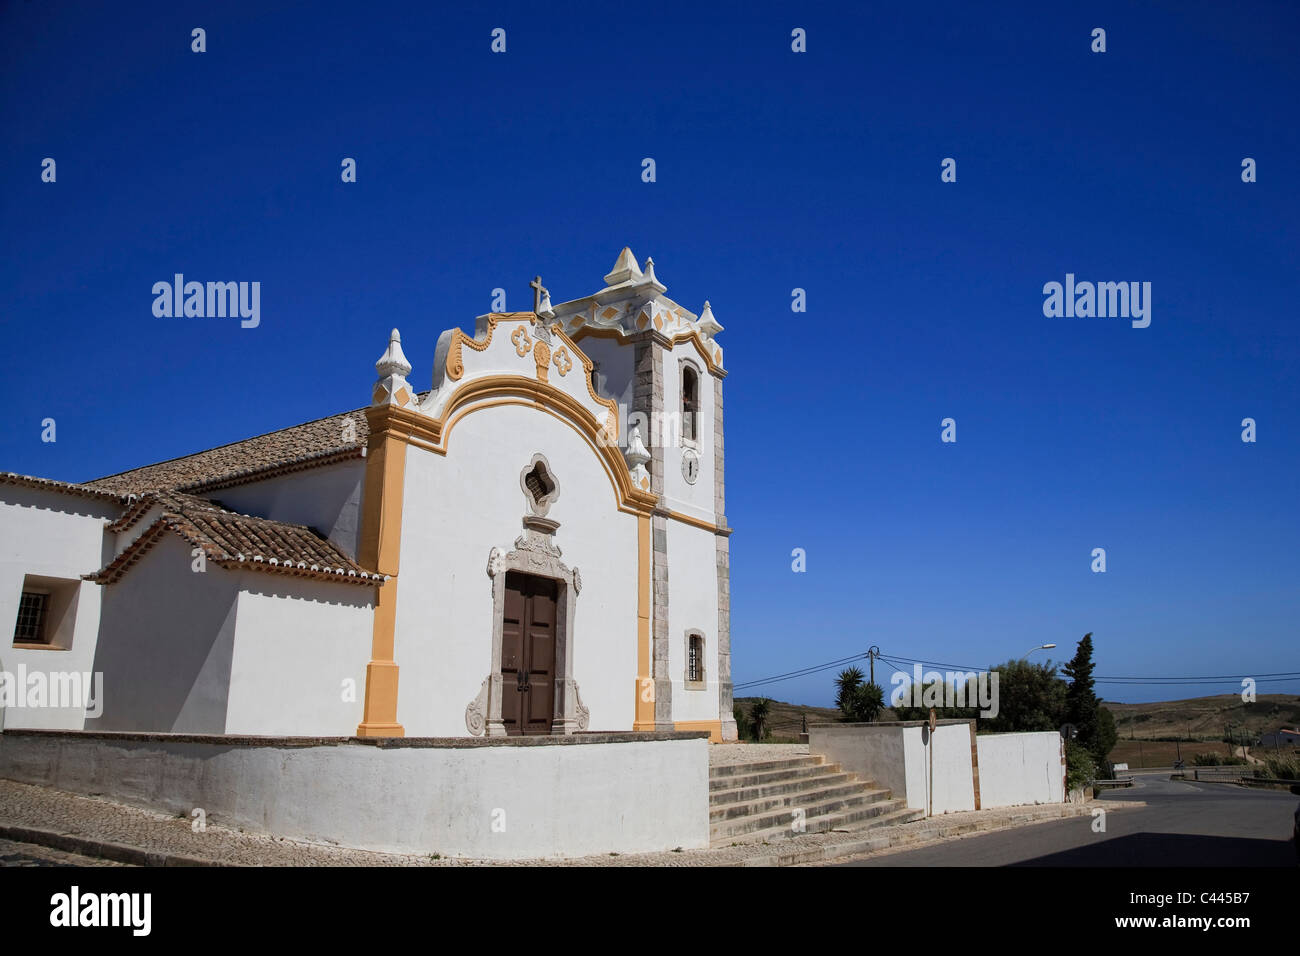 Ingreja Nossa Senhora da Conceicao, Villa do Bispo, Algarve, Portugal Stock Photo